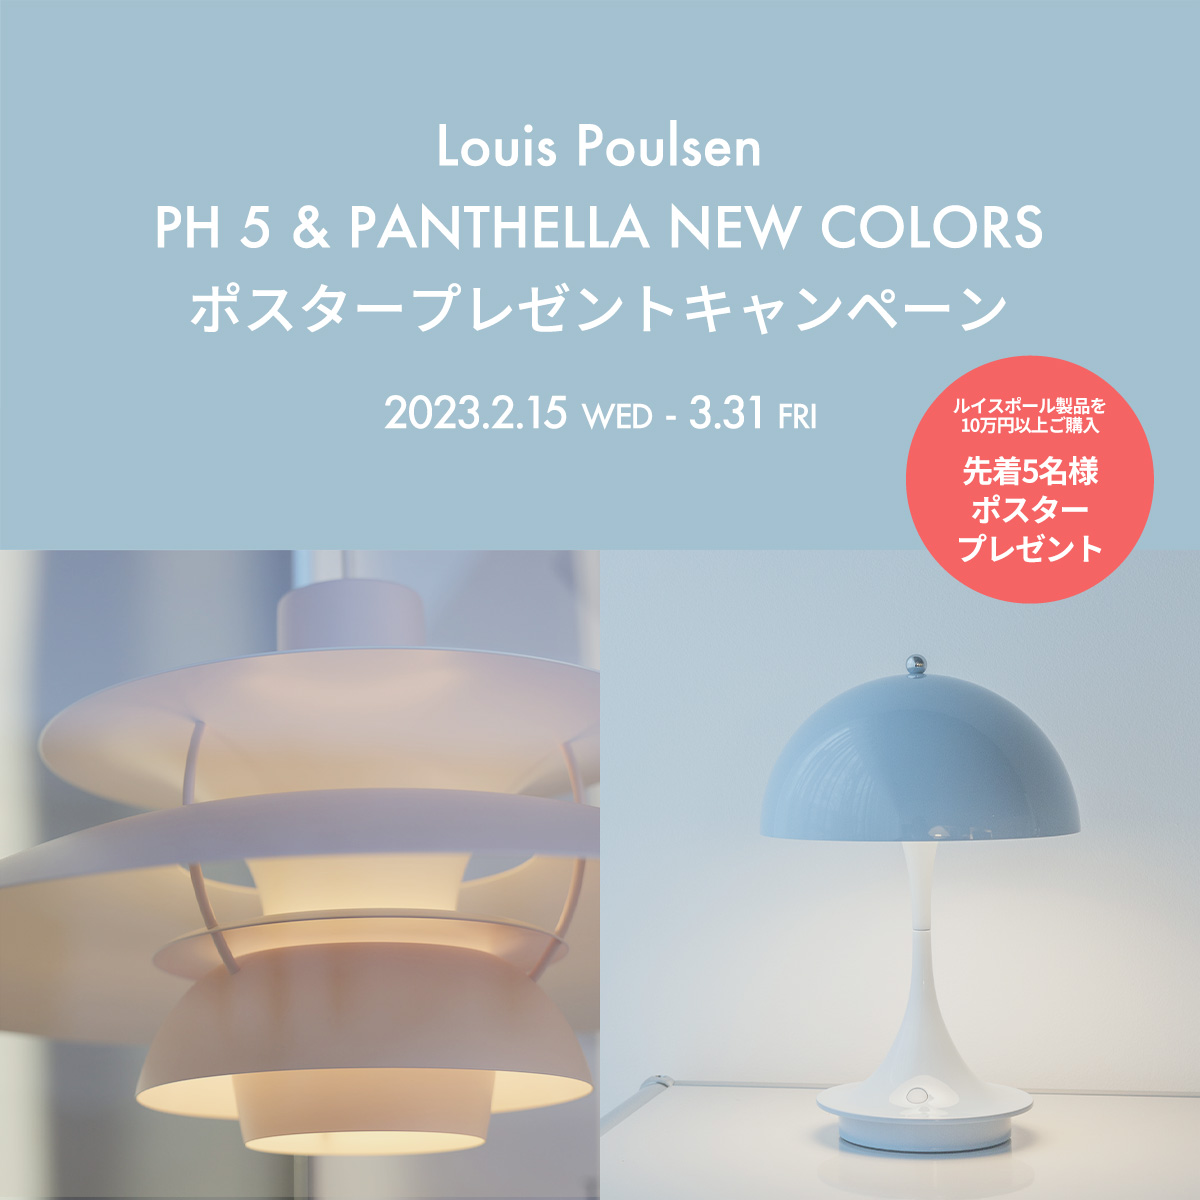 Louis Poulsen - PH 5 & Panthella New colors ポスタープレゼントキャンペーン